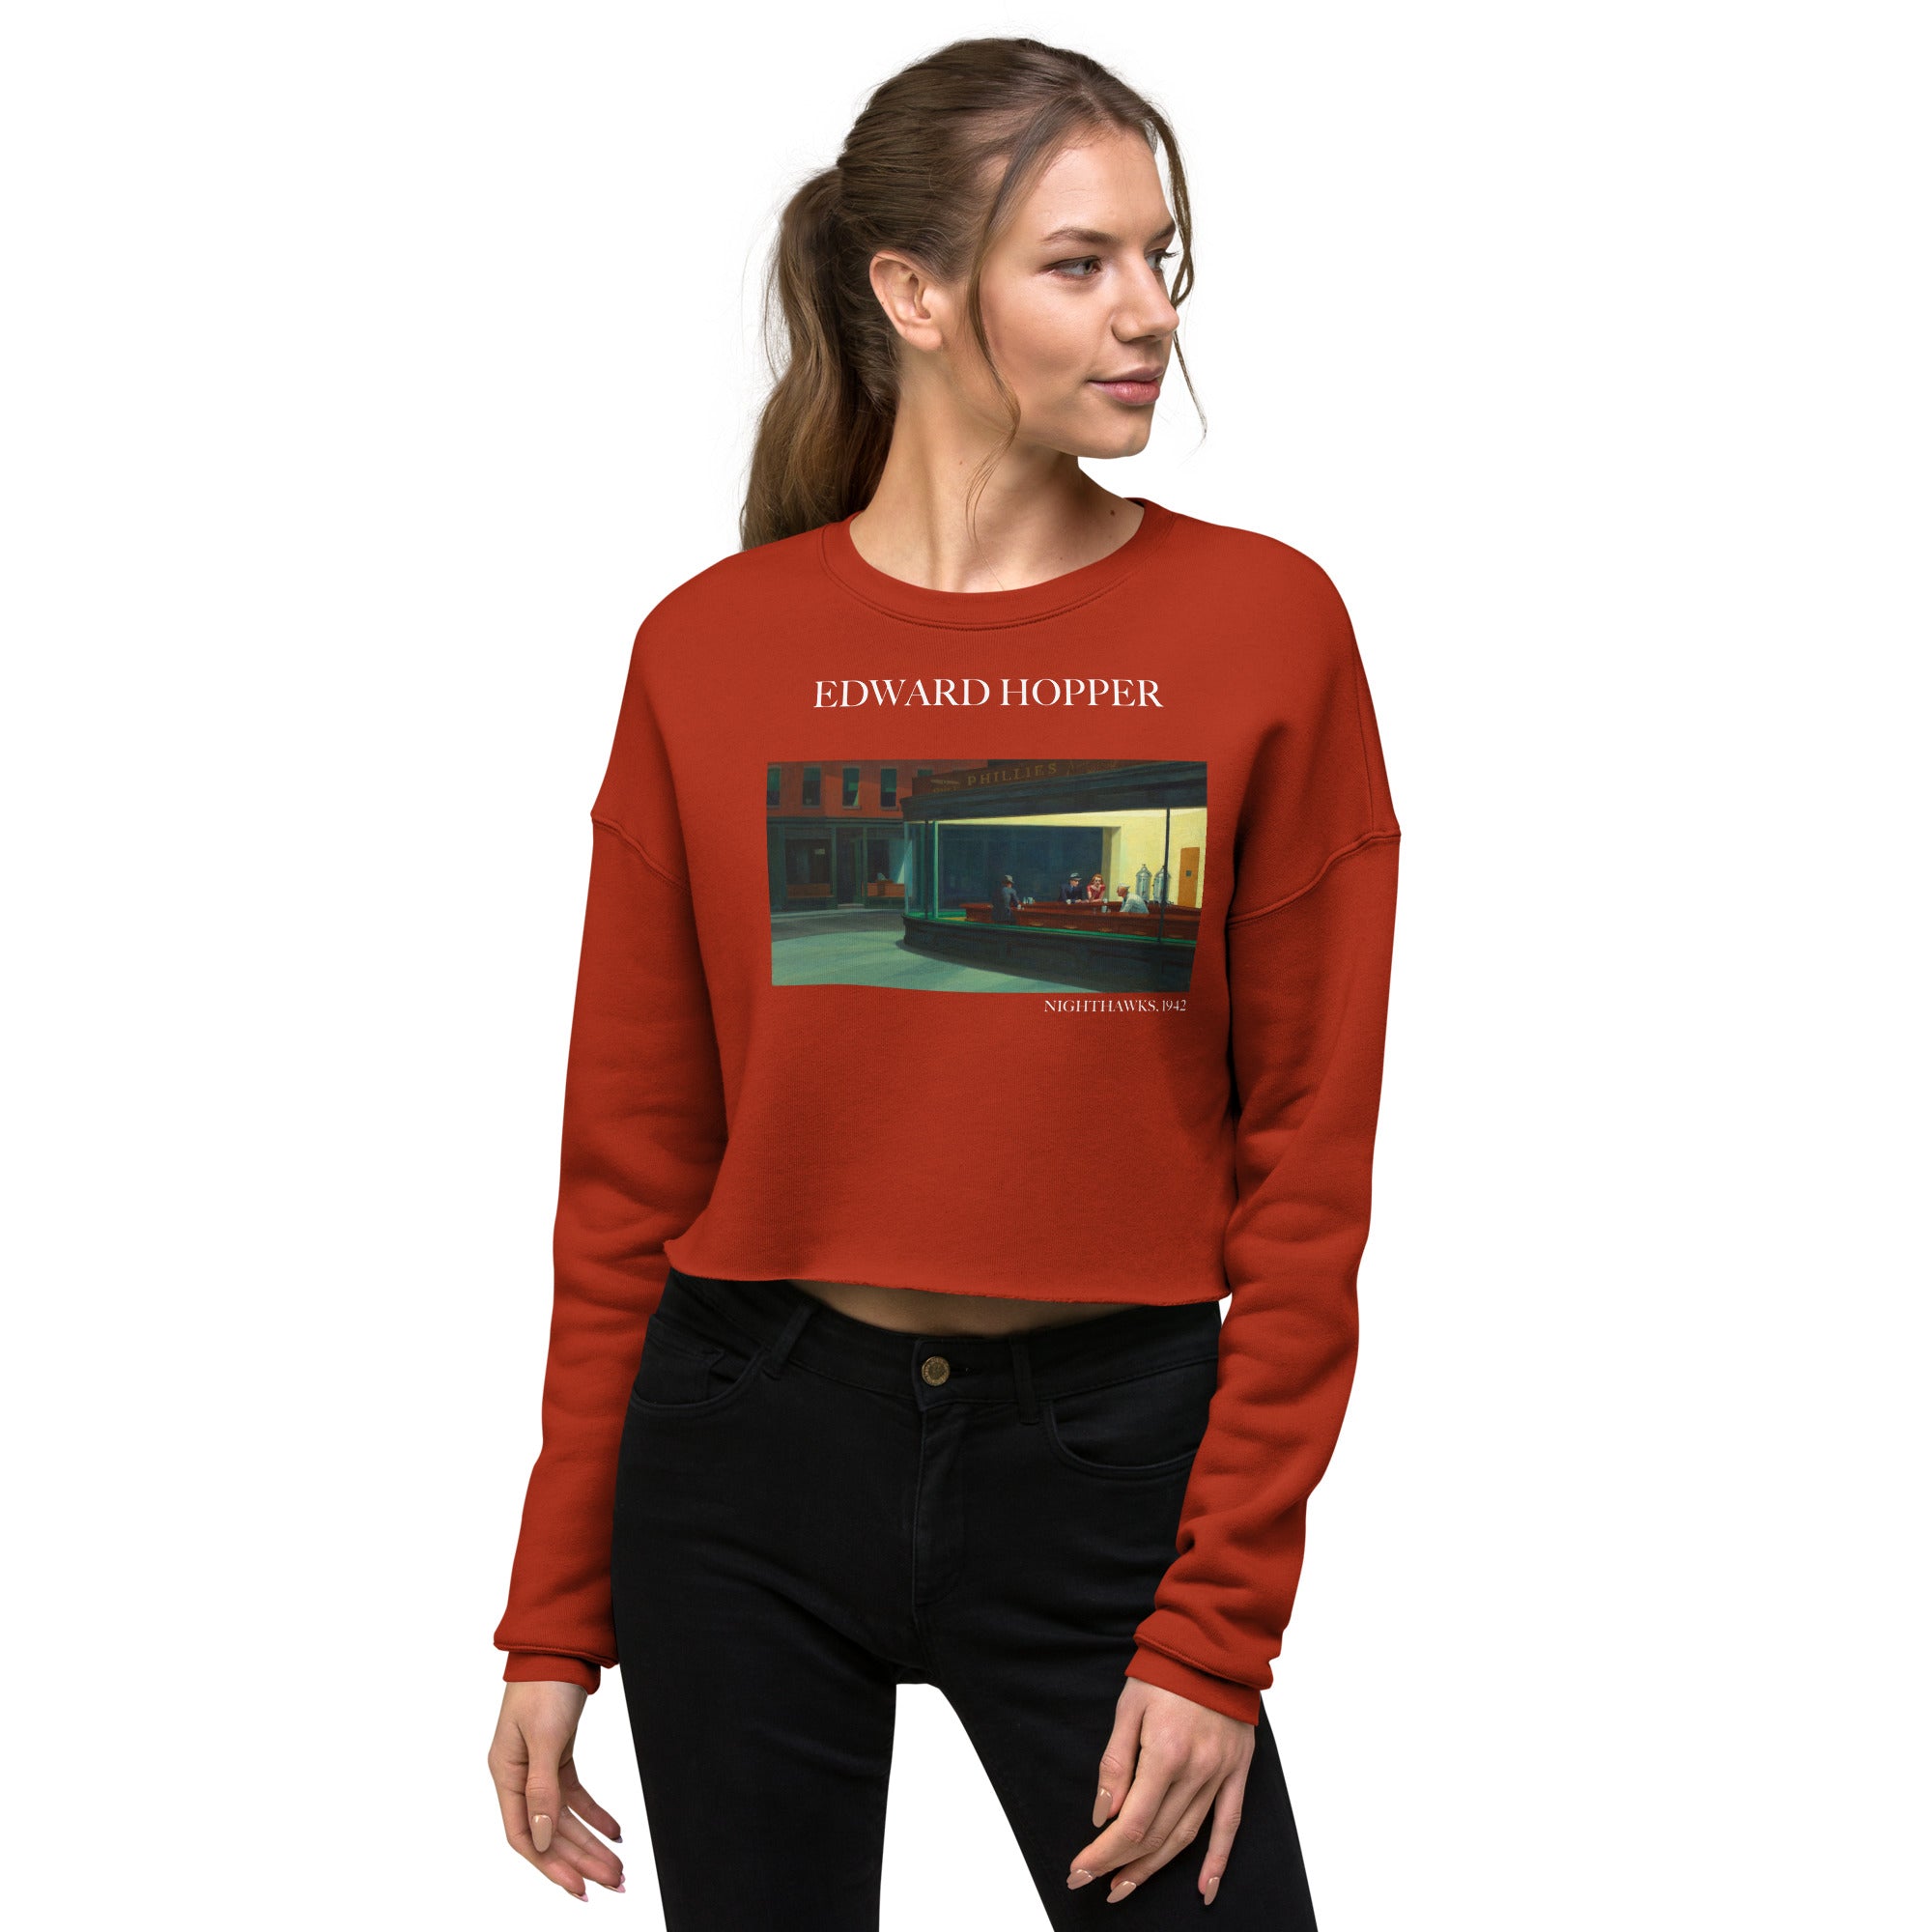 Edward Hopper „Nighthawks“ – Kurzes Sweatshirt mit berühmtem Gemälde | Kurzes Sweatshirt mit Premium-Kunstmotiv